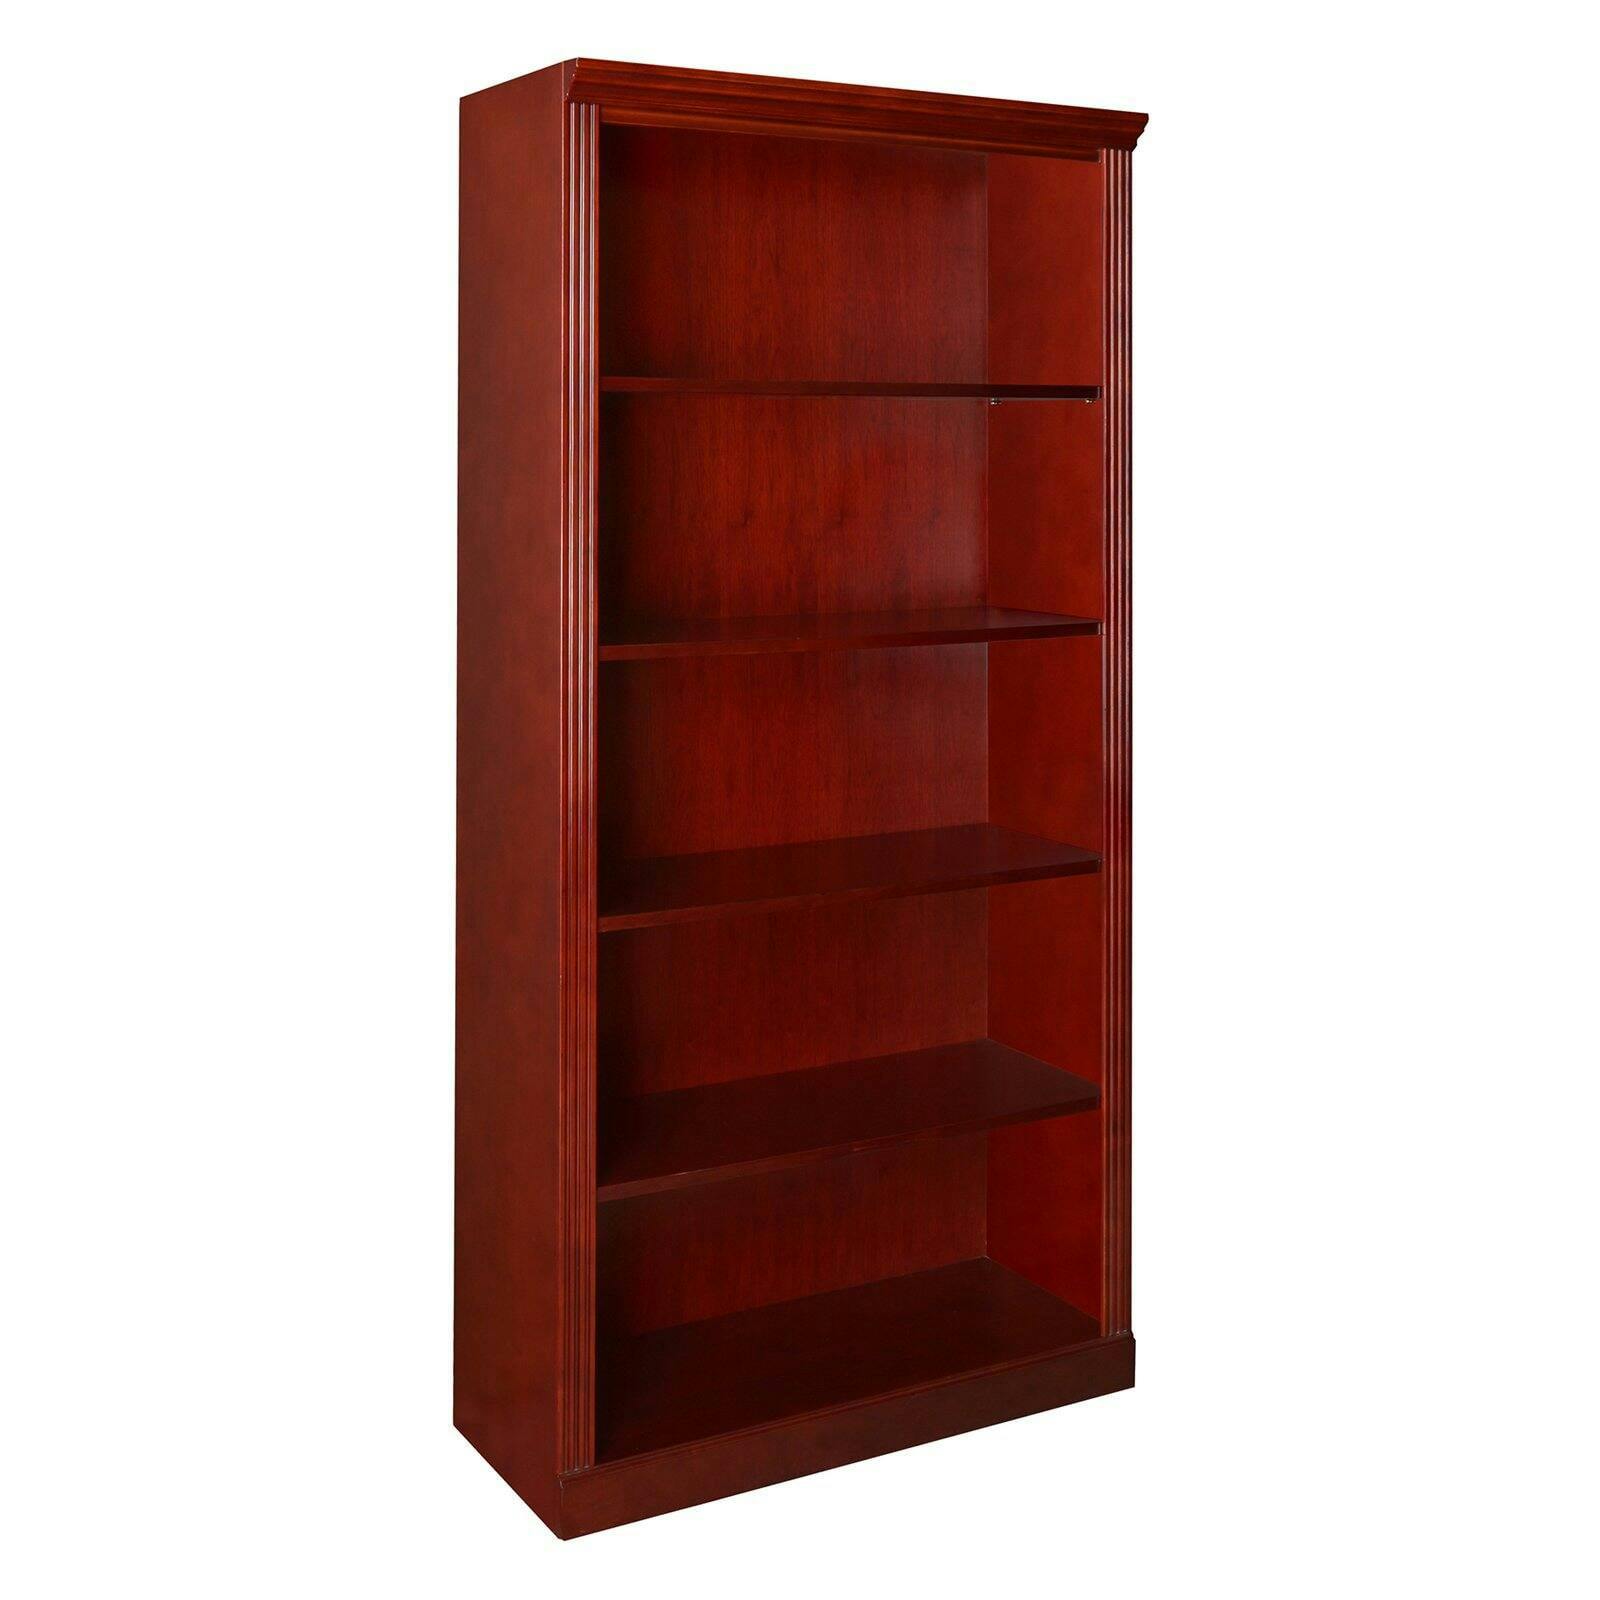 Prestige Cherry Wood Adjustable 4-Shelf Bookcase